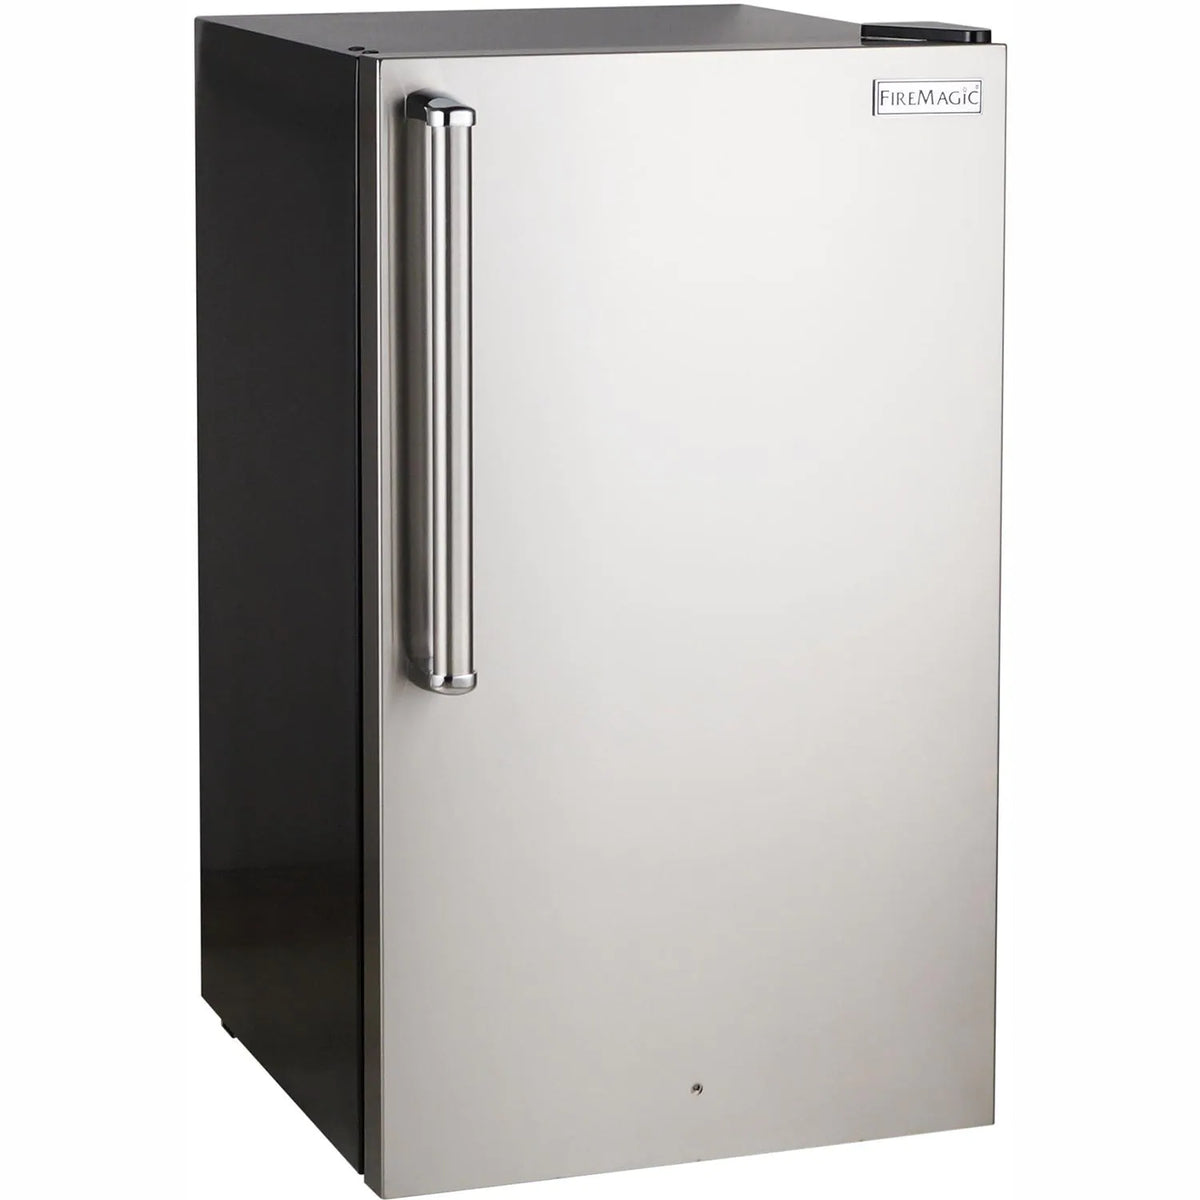 Fire Magic Premium 20 Inch Compact Refrigerator